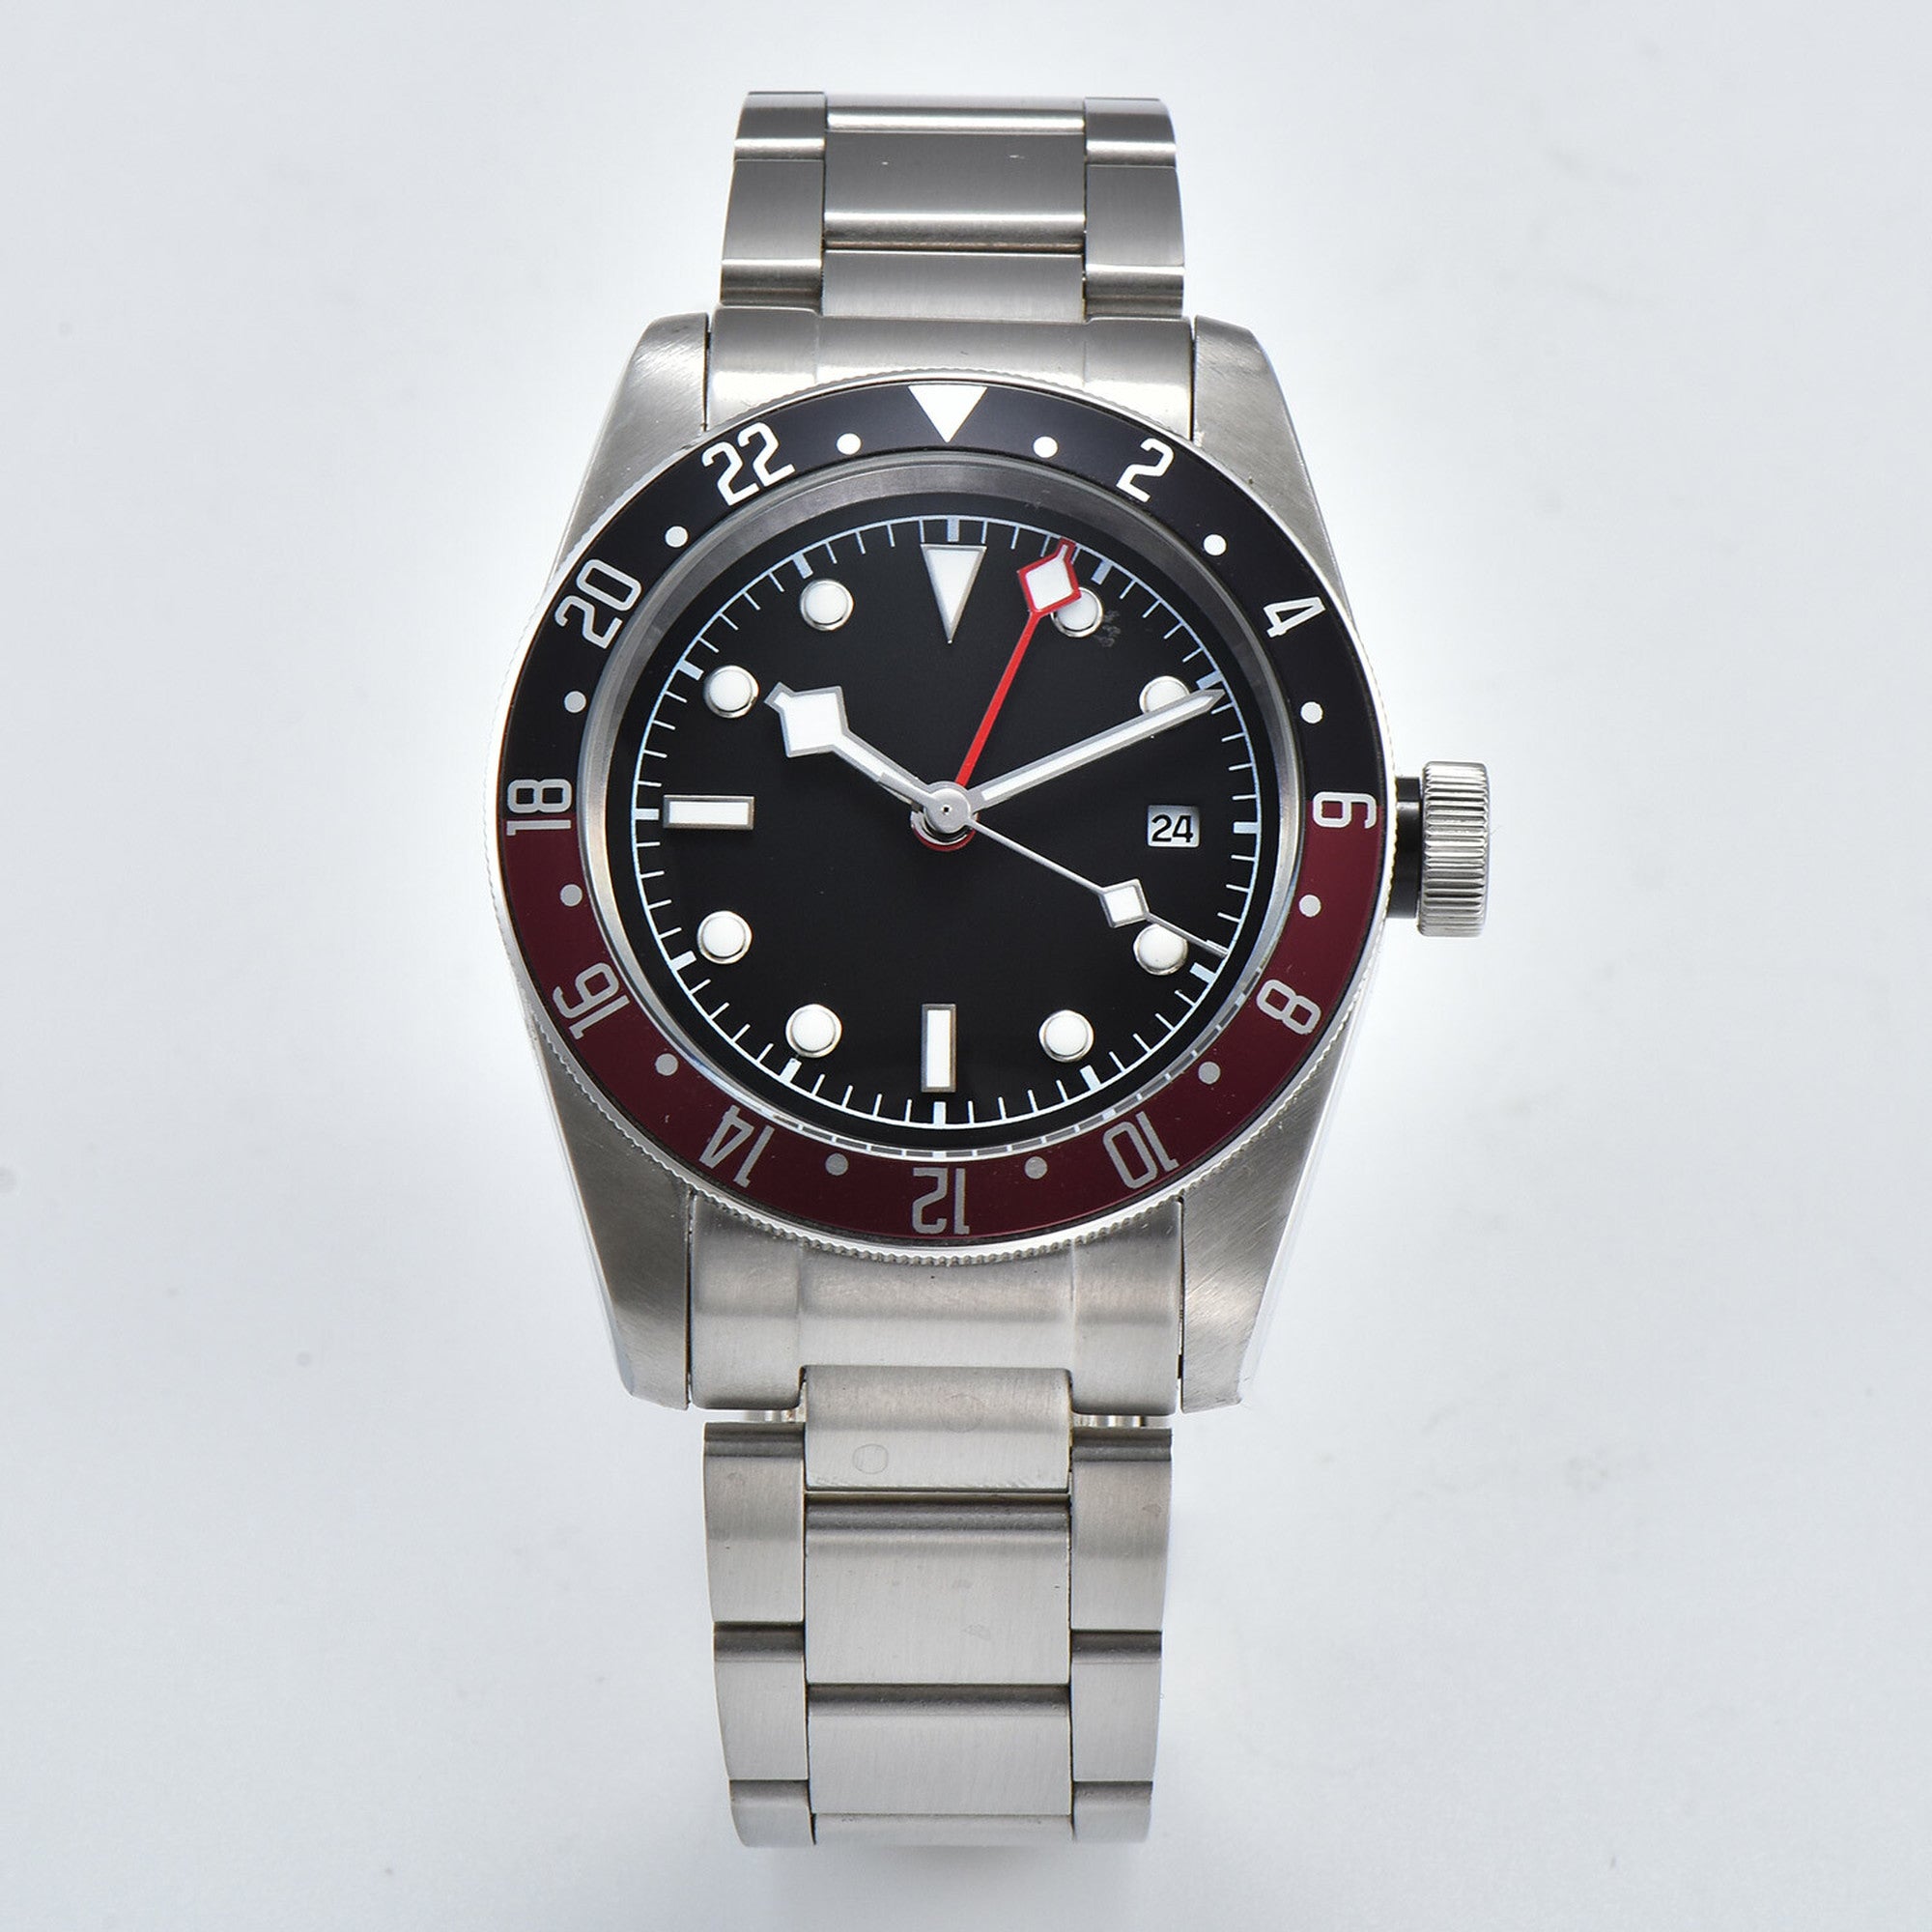 Men's Mechanical Self-winding Black Bay GMT Watch Black, Red / Suit, Popular Brand / Fashion B47